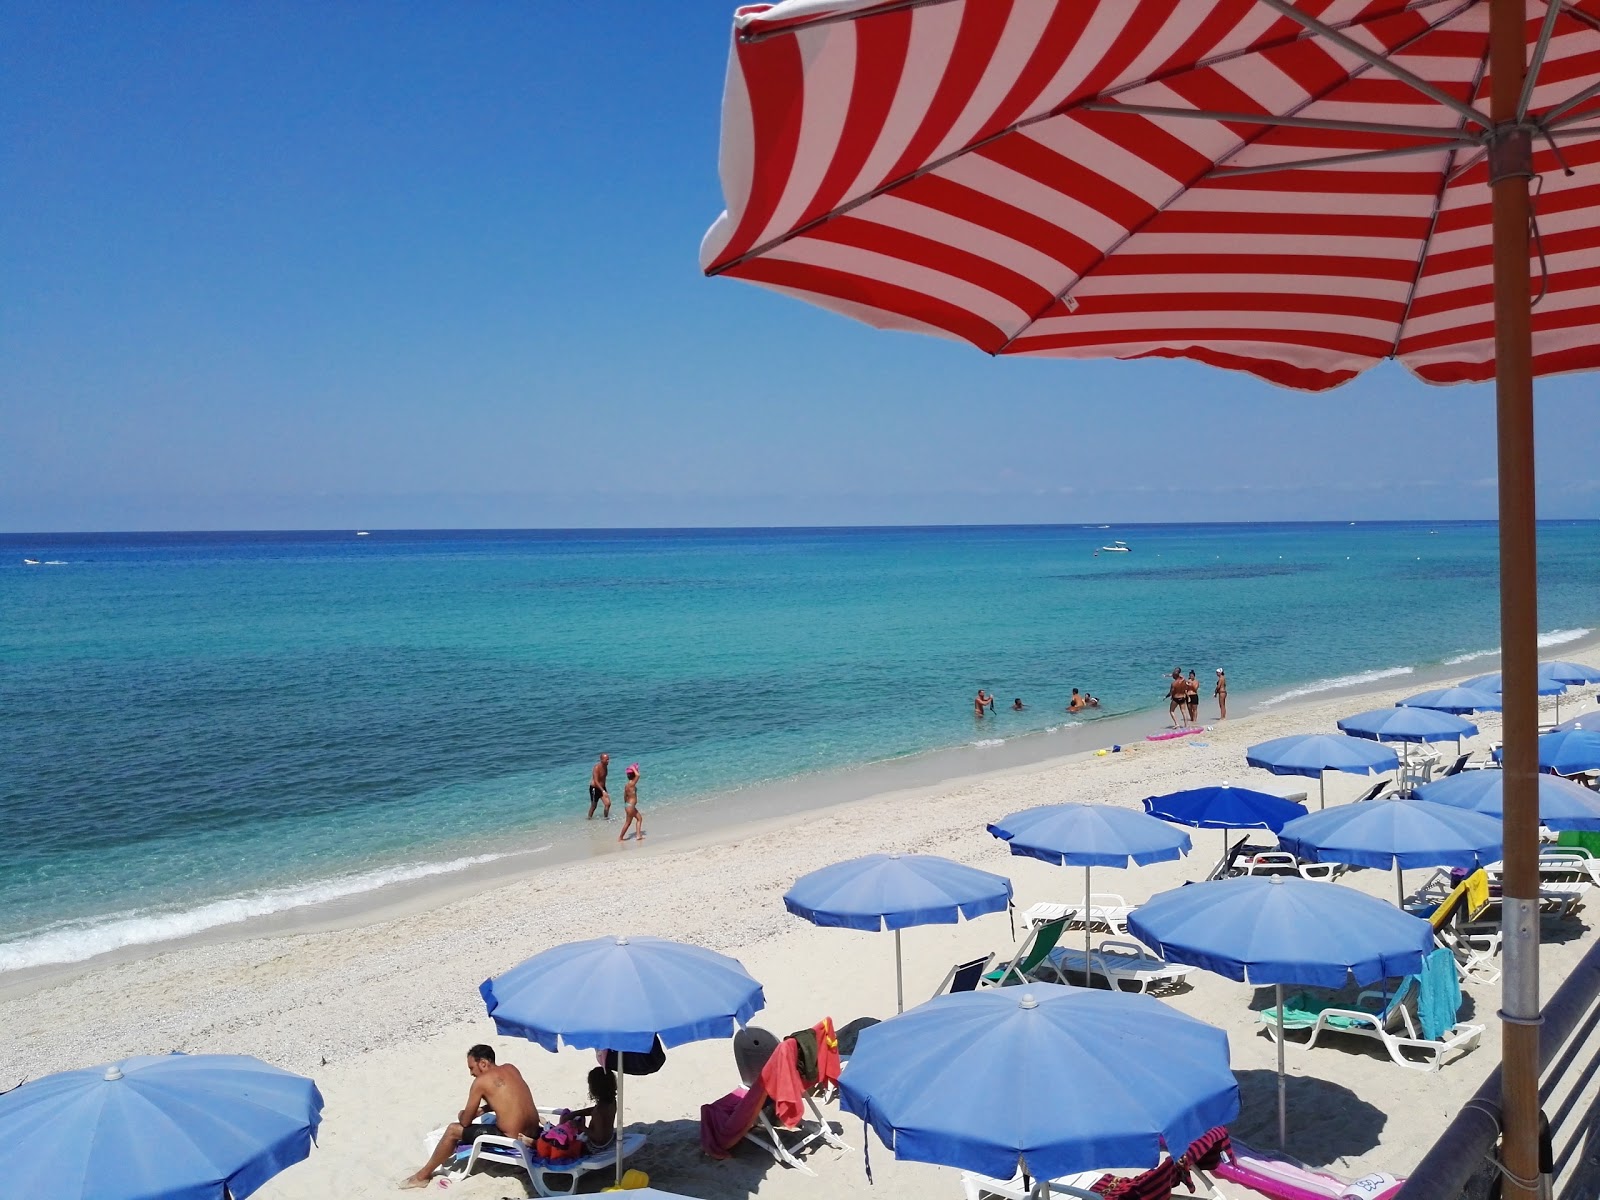 Spiaggia Libera Di Zambrone'in fotoğrafı mavi saf su yüzey ile